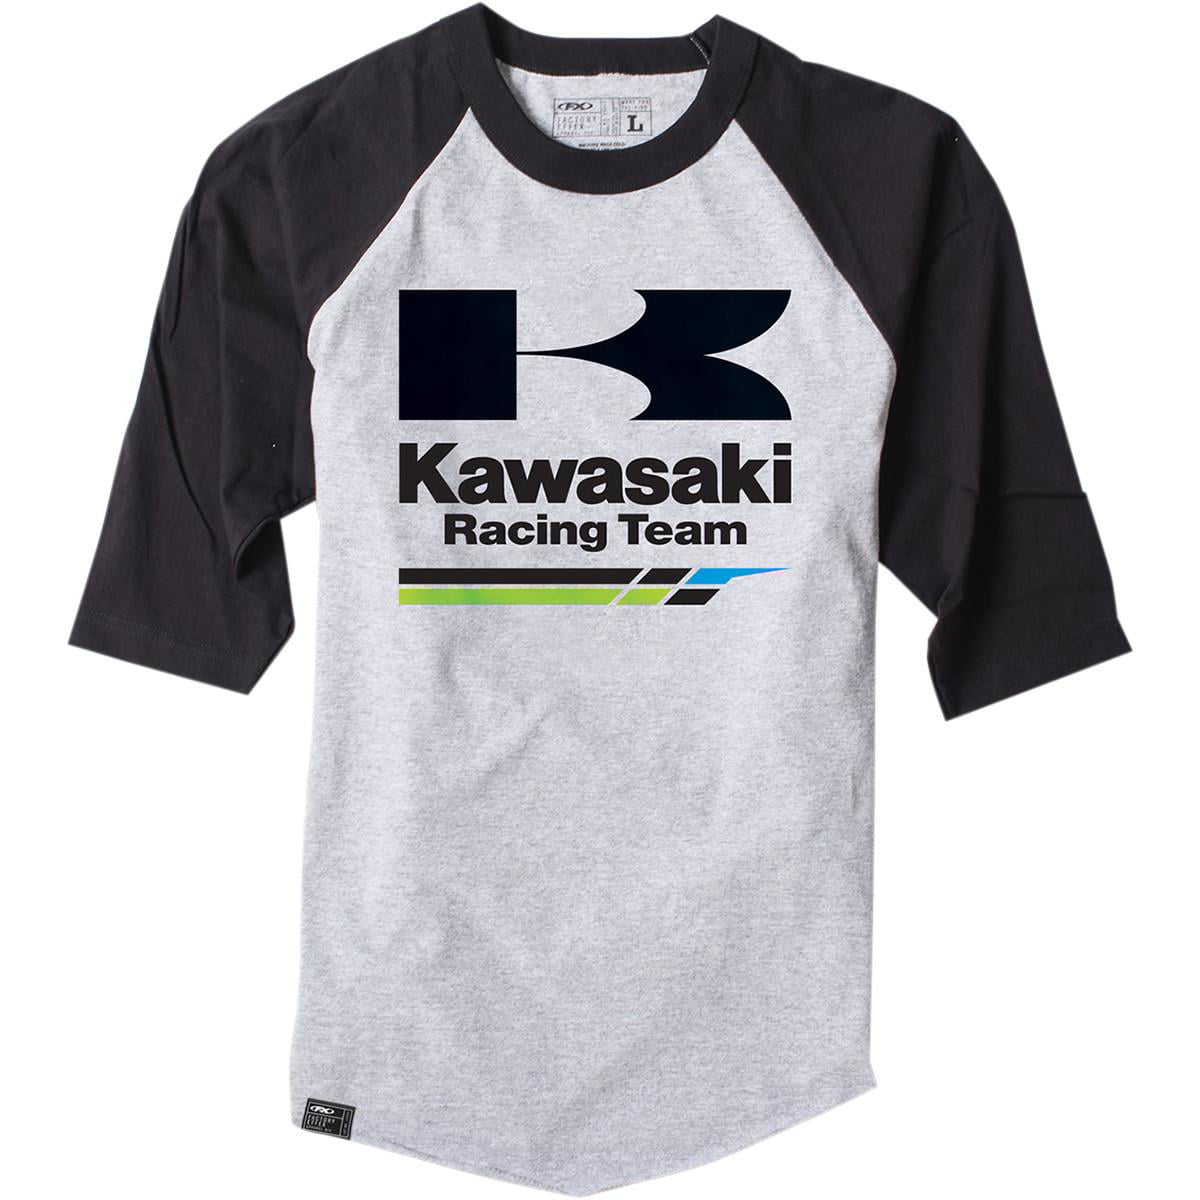 Factory Effex Women's Kawasaki Racing Team Long Sleeve T Shirt Black Tee